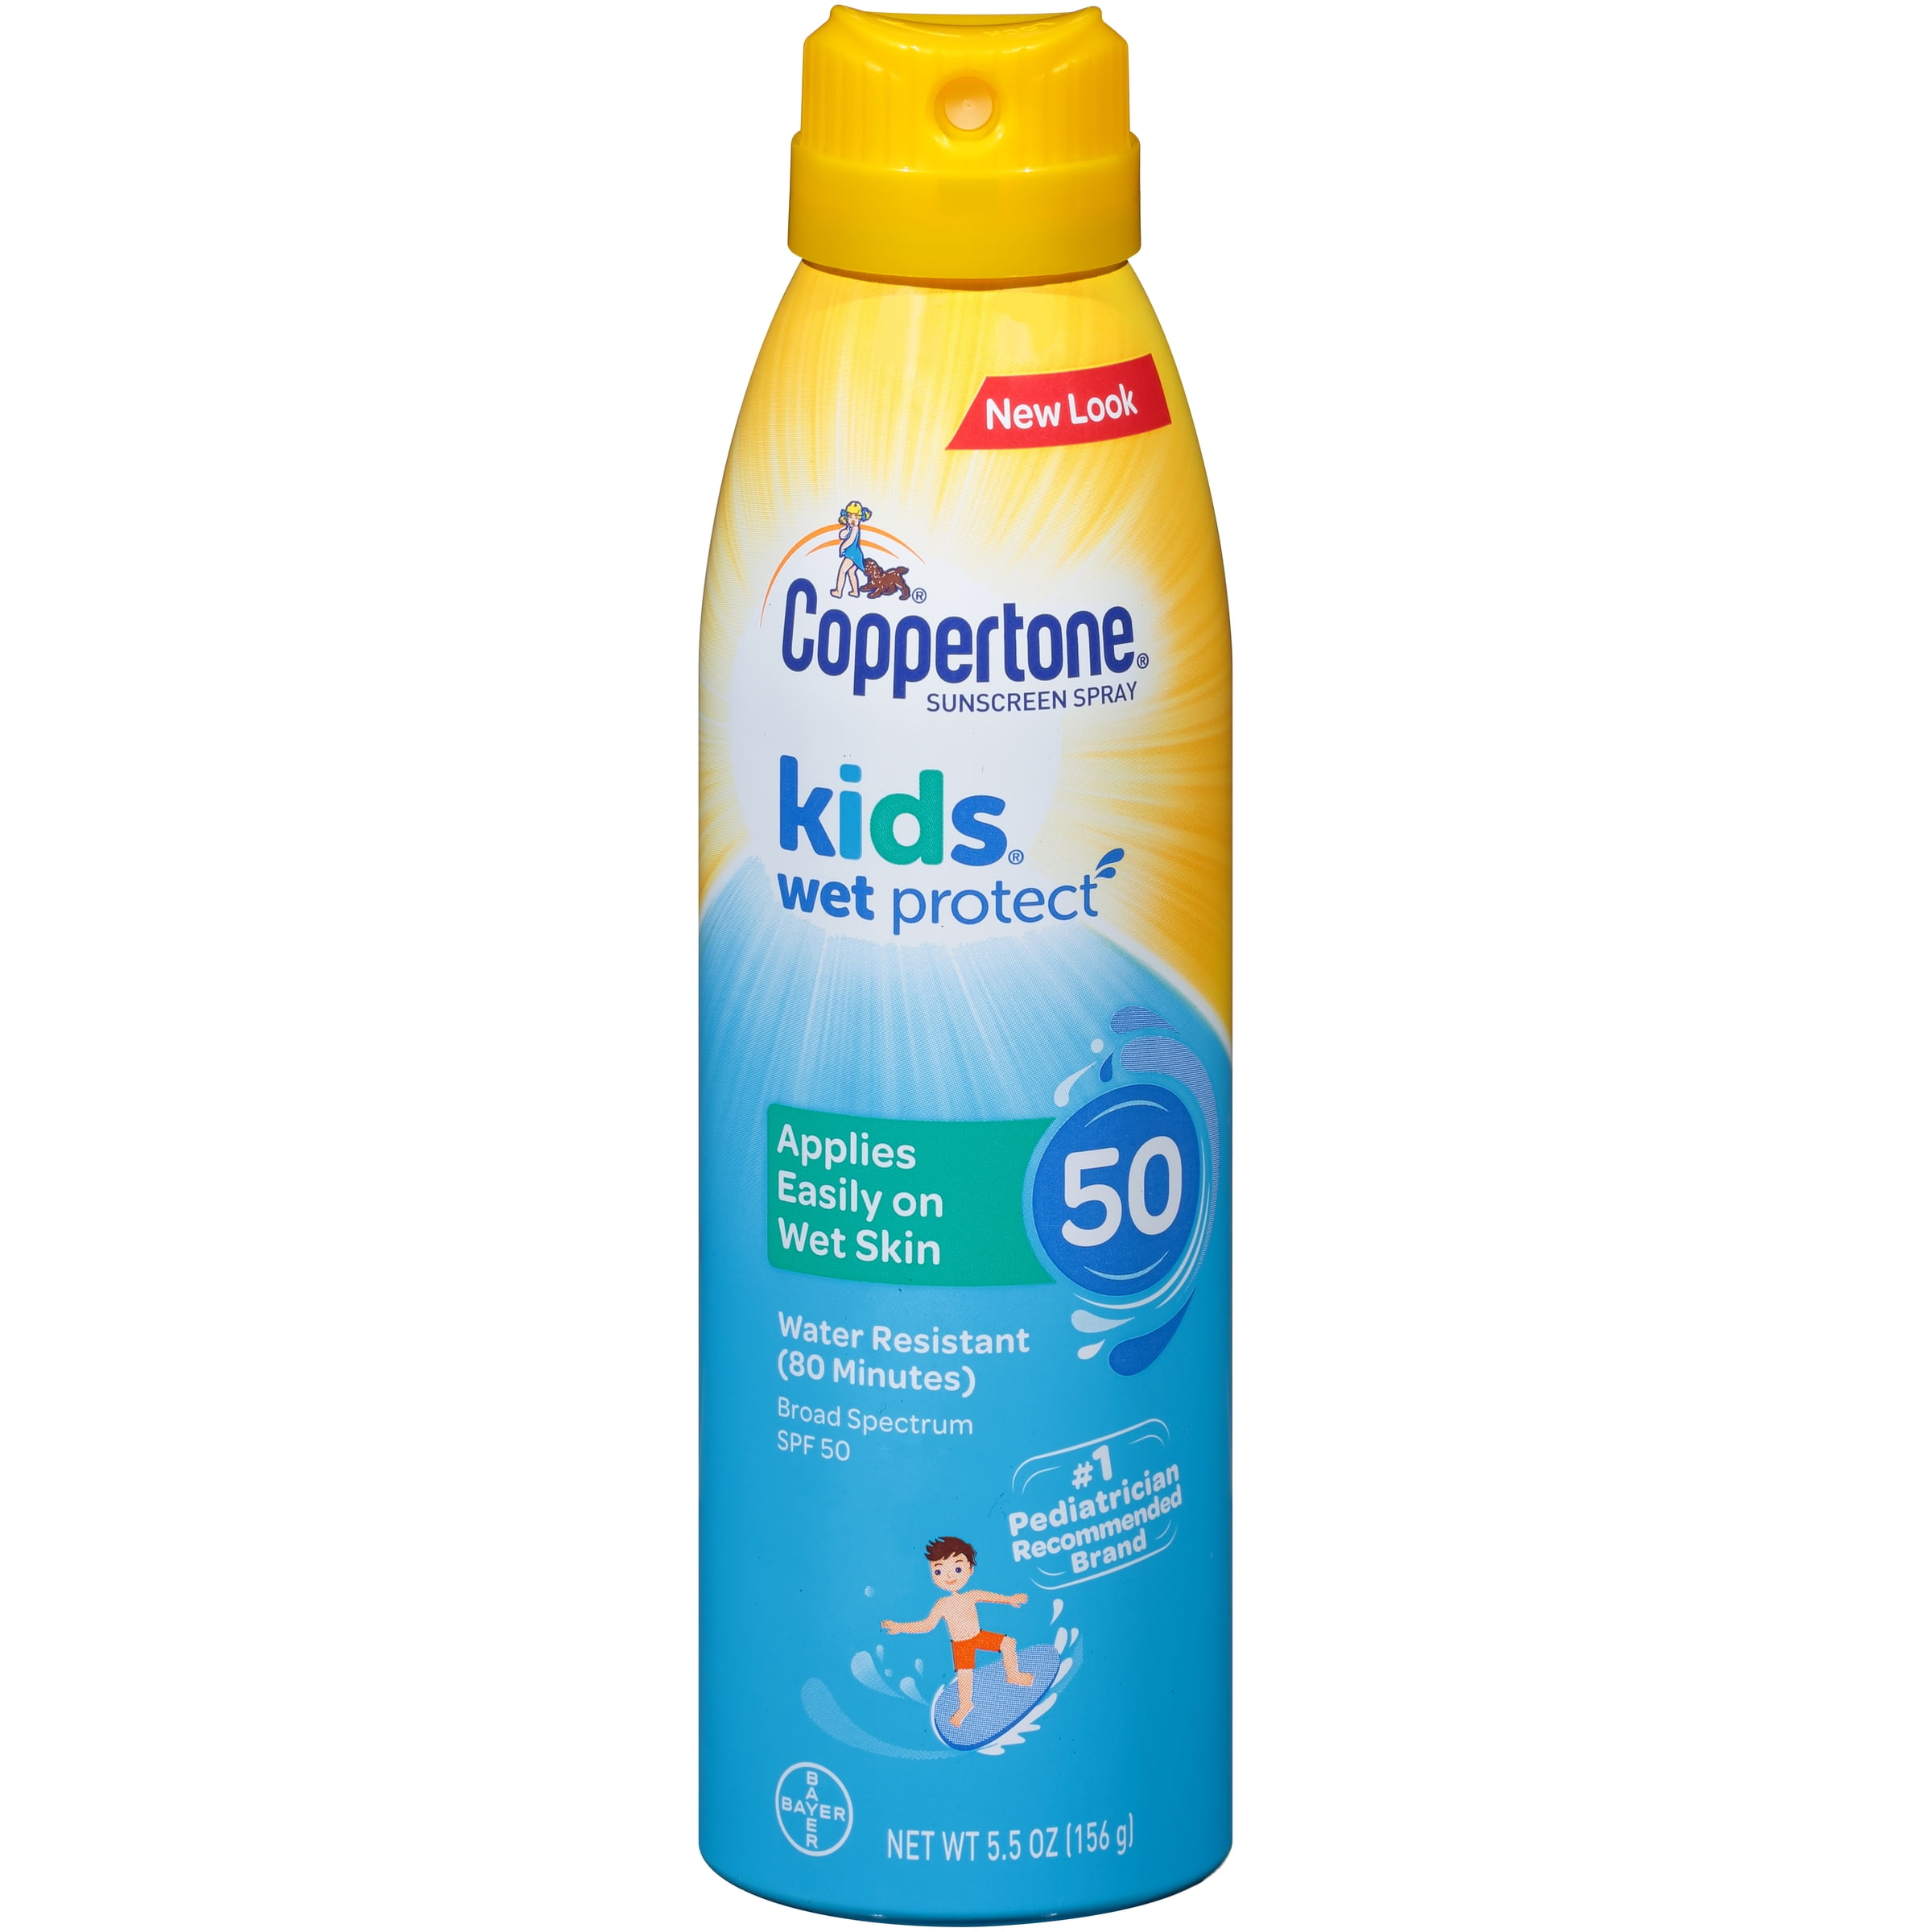 Coppertone Kids Sunscreen Wet Protect Spray SPF 50, 5.5 oz